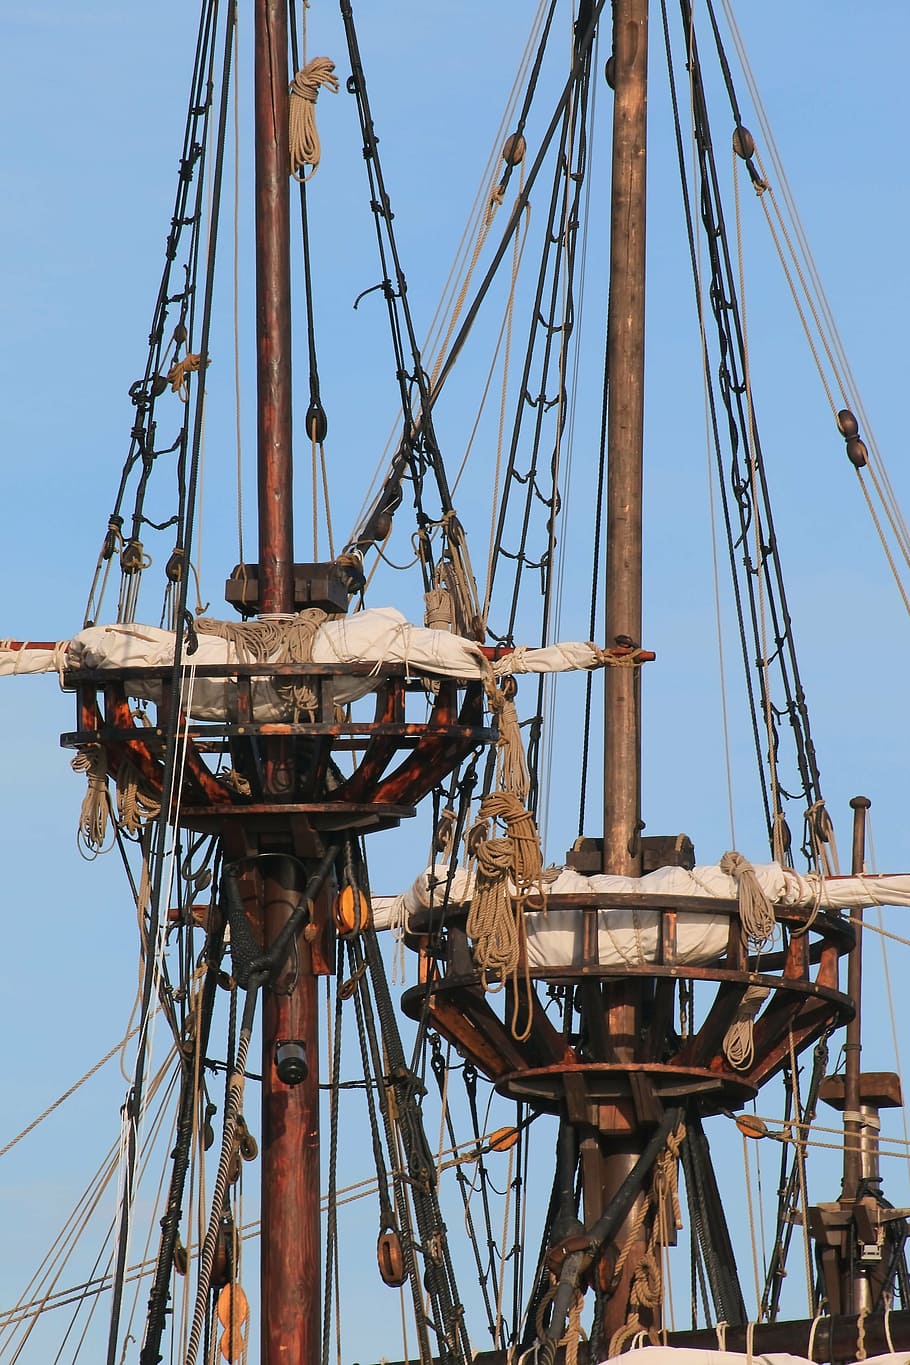 pirate ship, sail, masts, sea, rigging, cordage, dew, view details